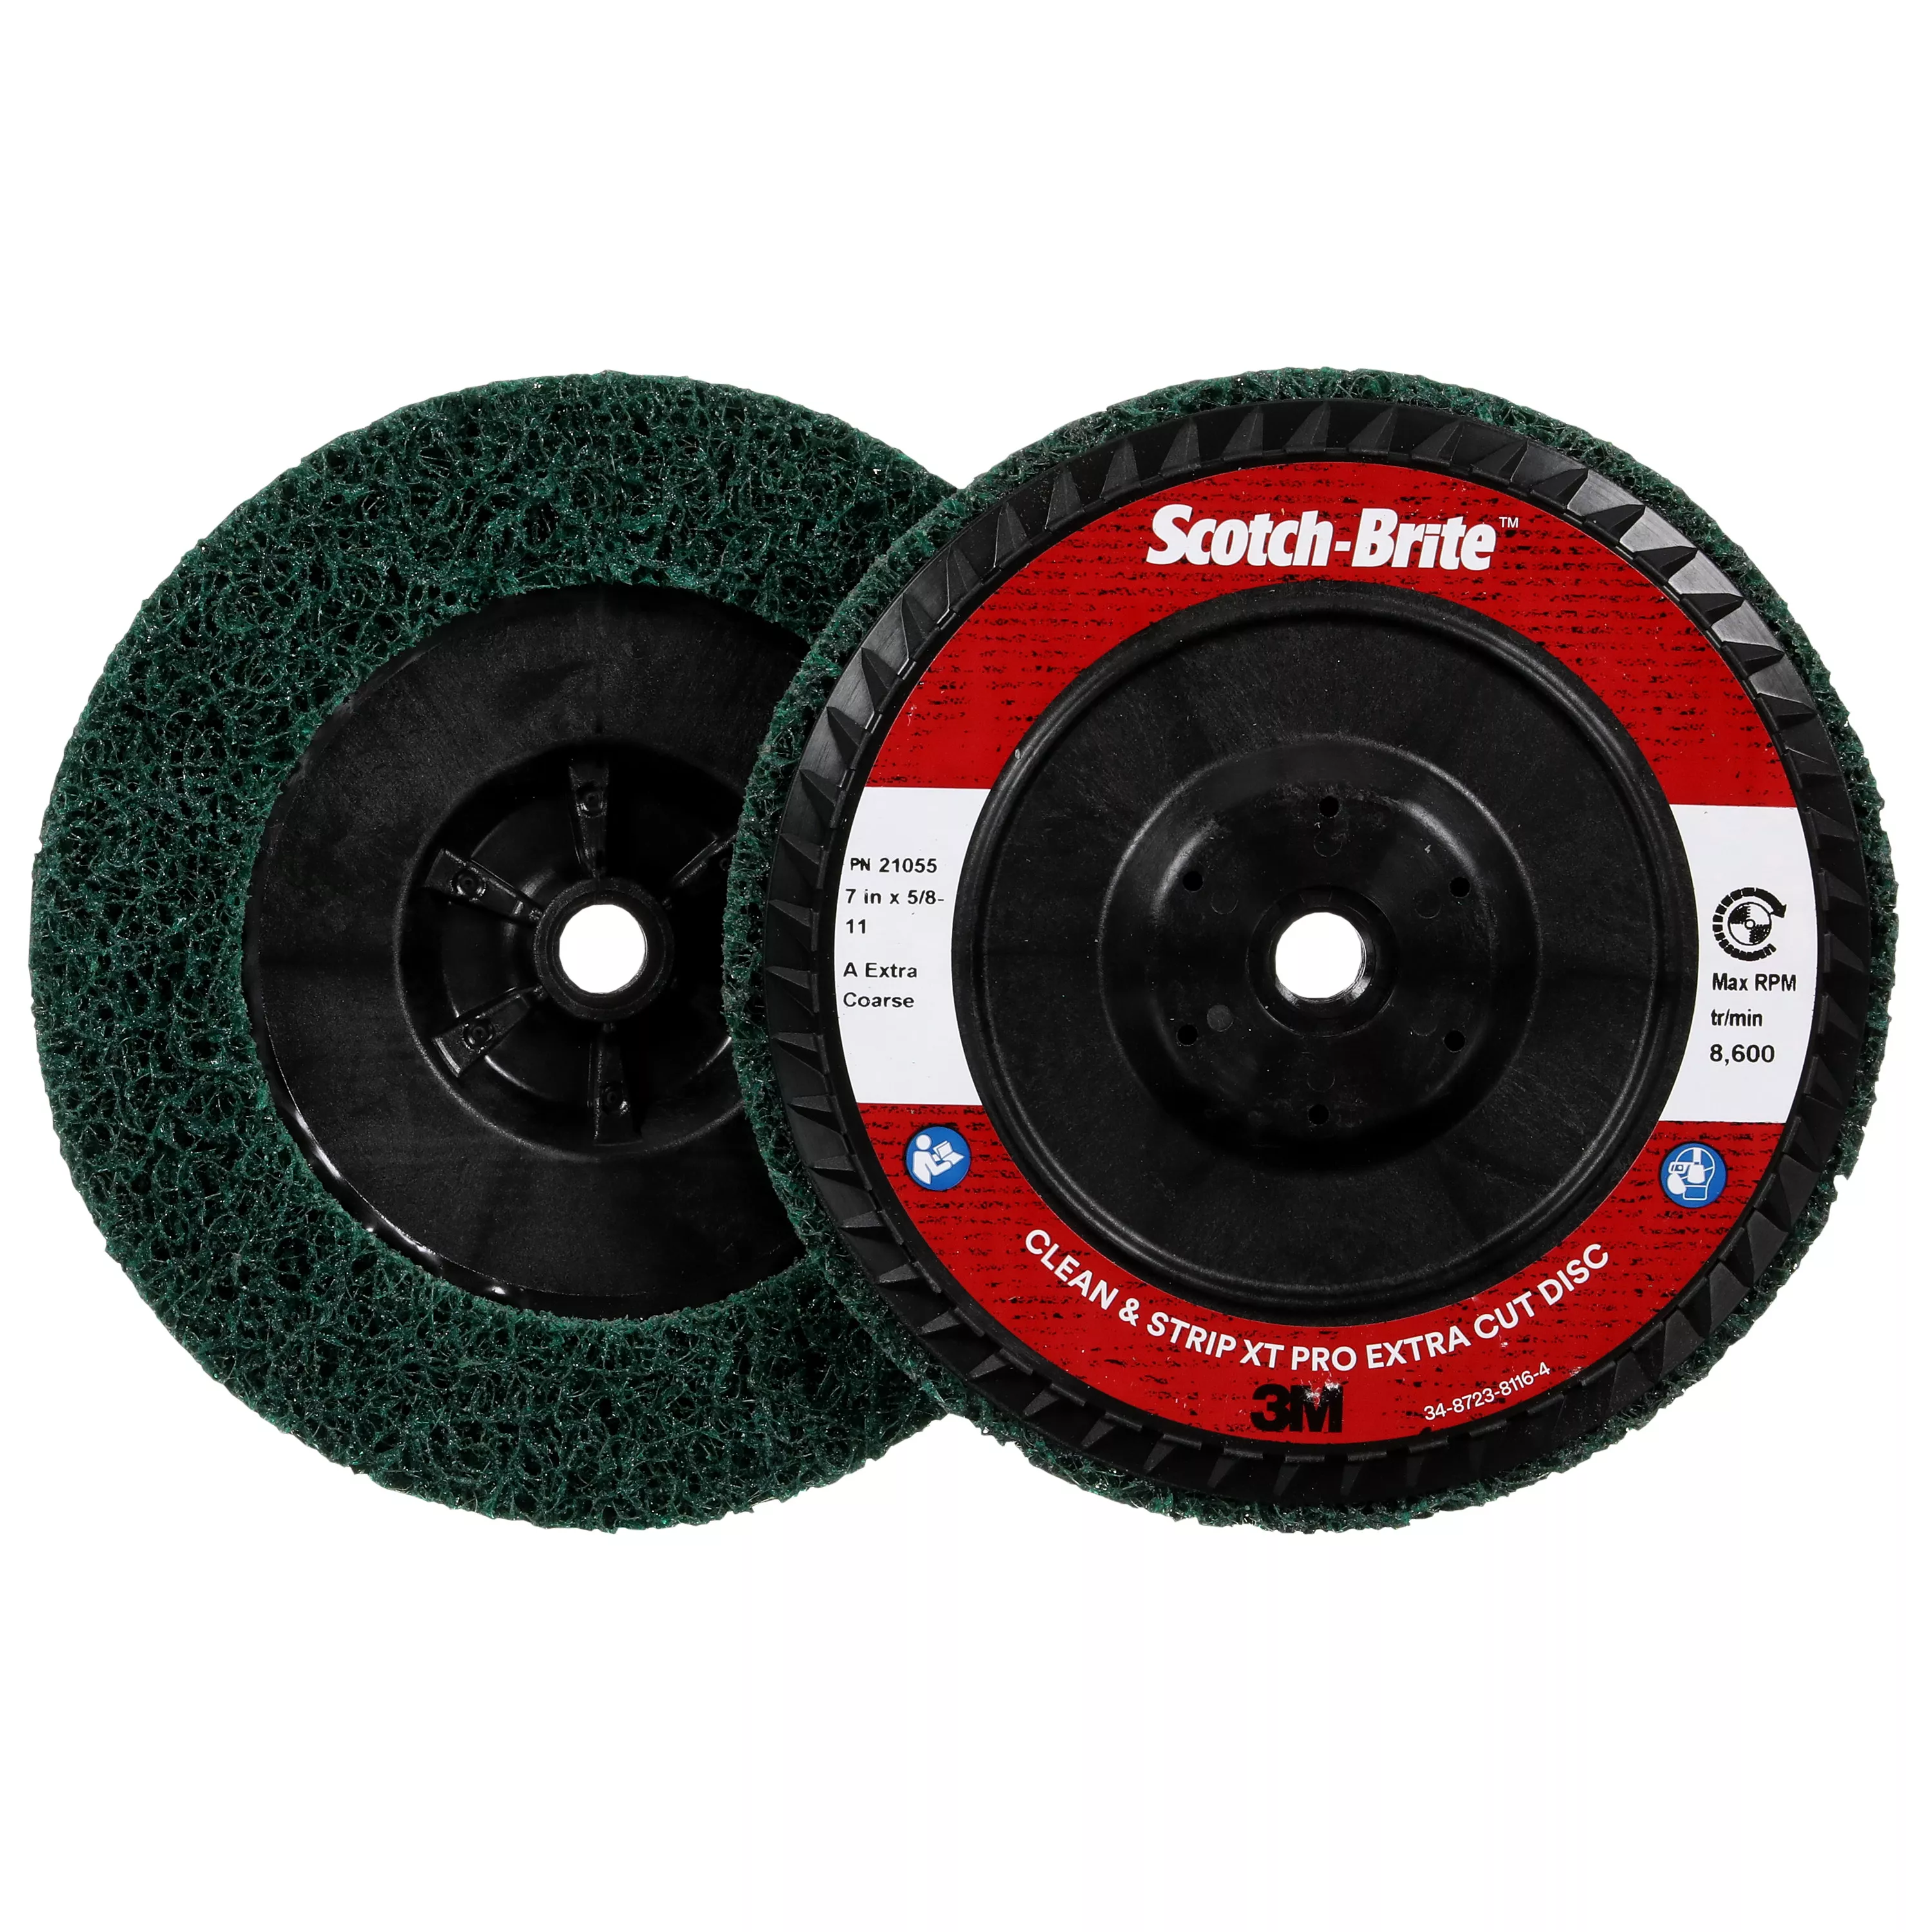 Scotch-Brite™ Clean and Strip XT Pro Extra Cut Disc, XC-DC, A/O Extra
Coarse, Green, 7 in x 5/8 in-11, Type 27, 5 ea/Case